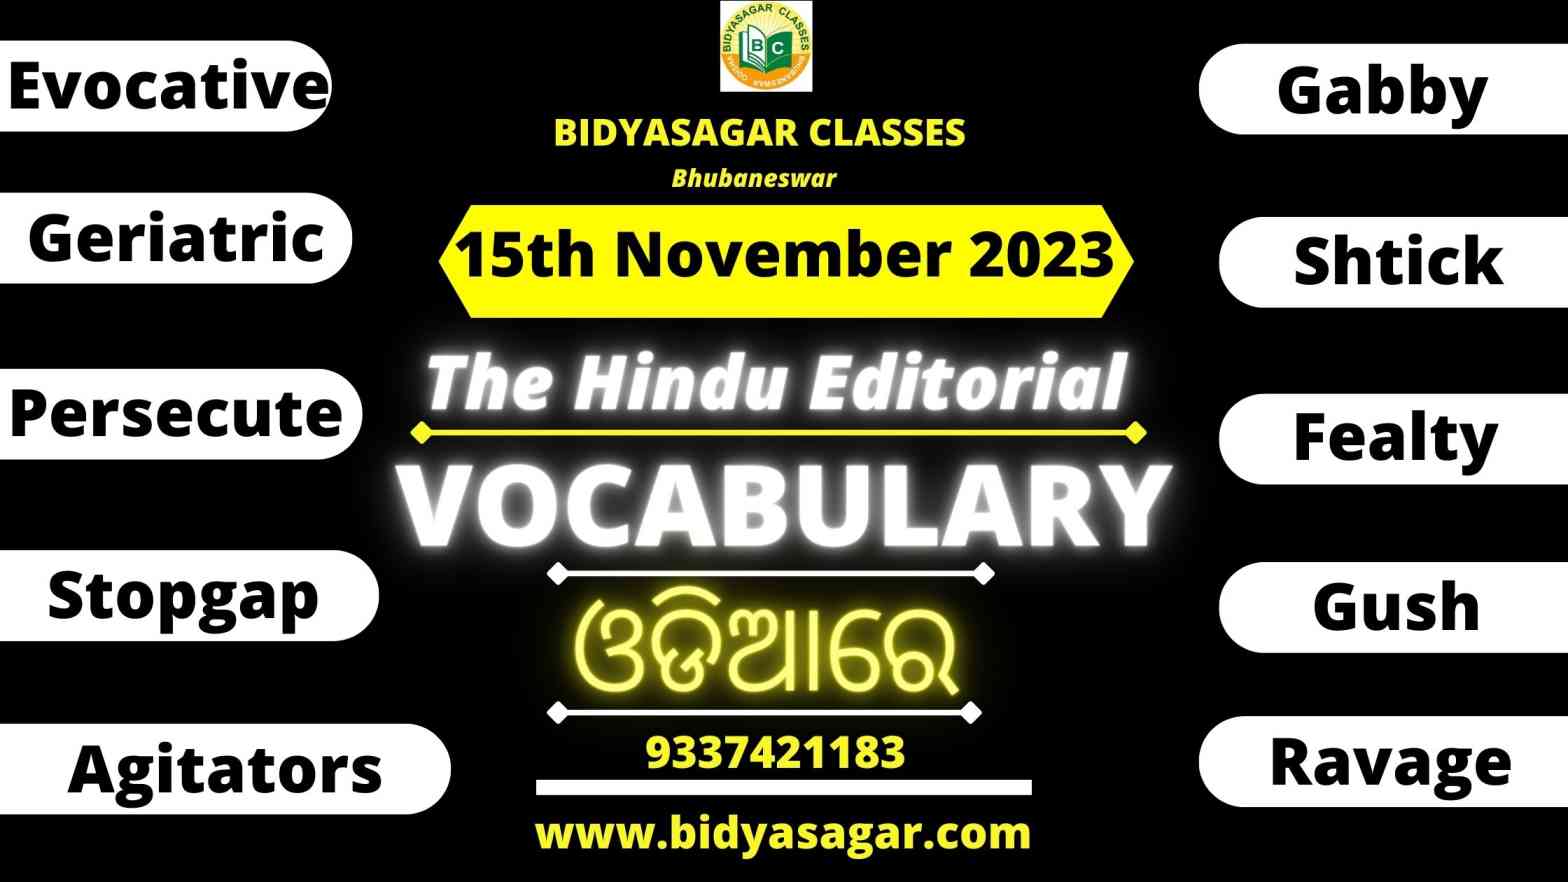 The Hindu Editorial Vocabulary of 15th November 2023